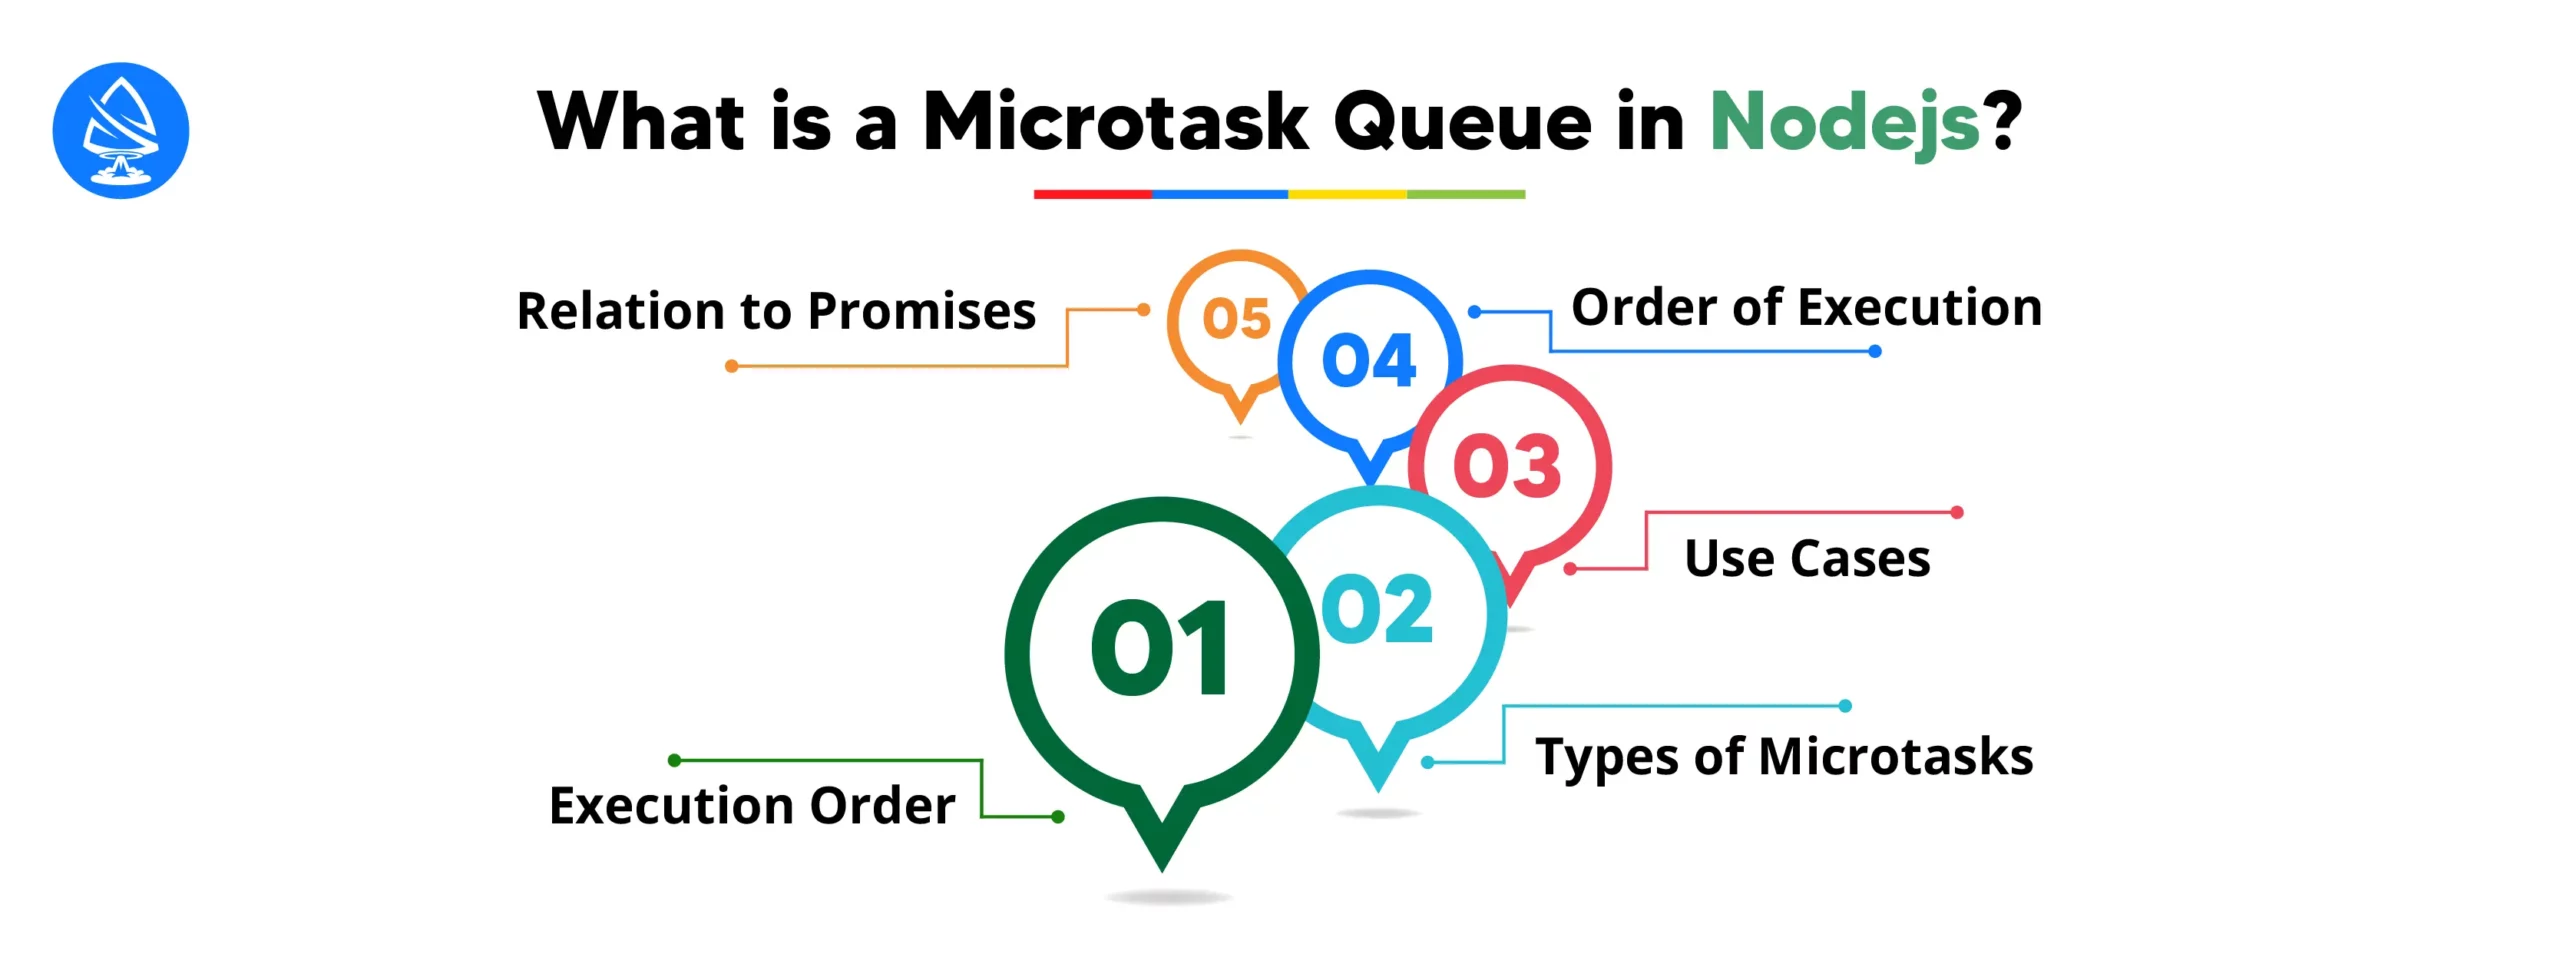 The Microtask Queue in Nodejs 